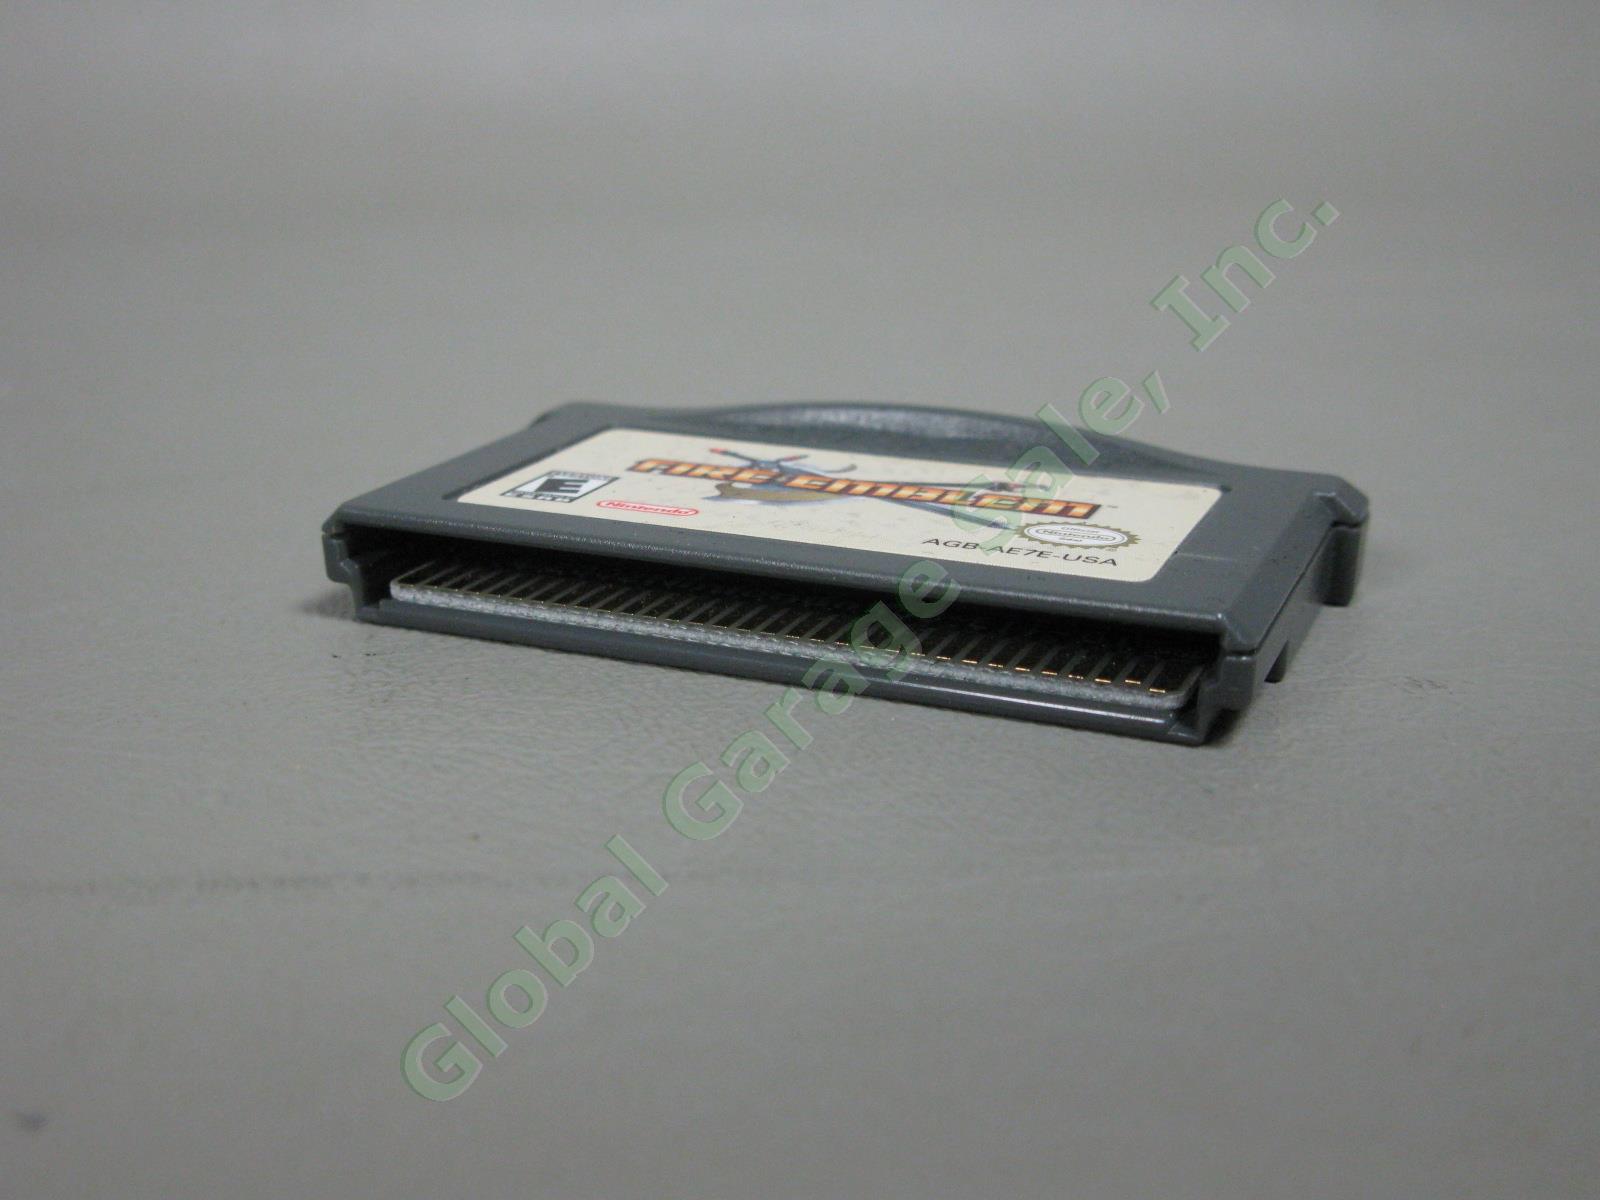 GBA Fire Emblem w/ Original Box Manual Complete Video Game Boy Advance Nintendo 3